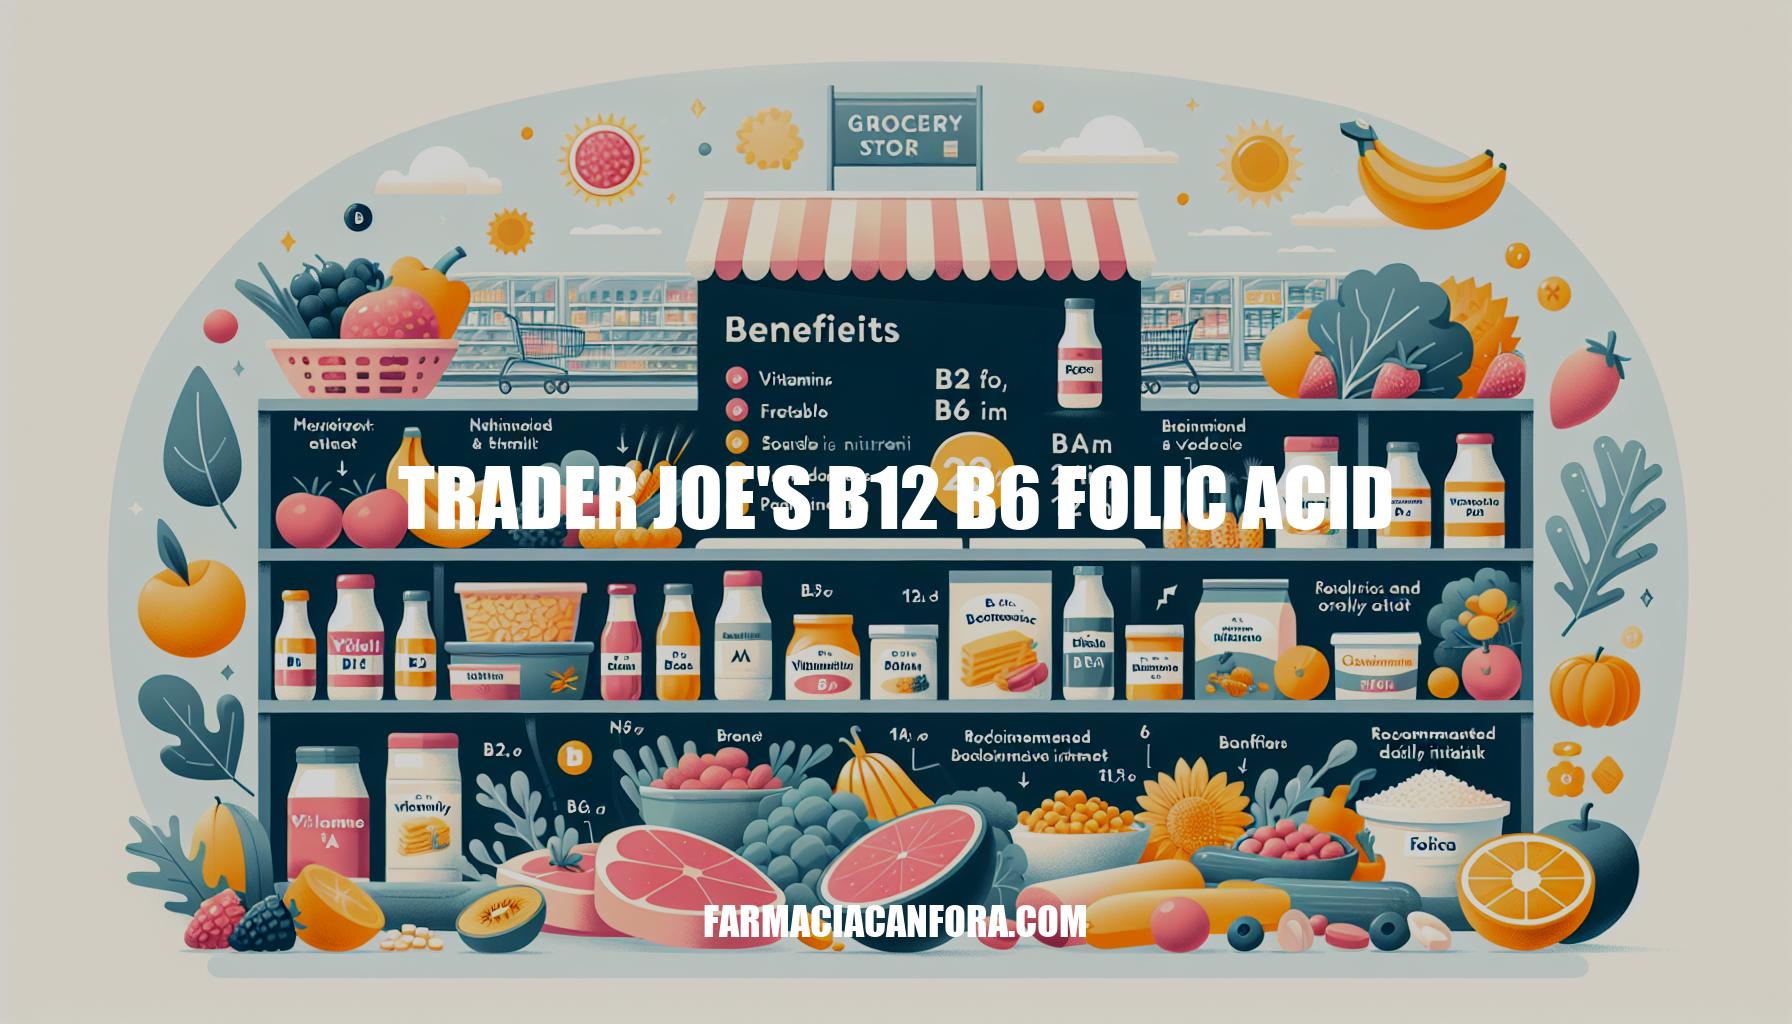 Trader Joe's B12 B6 Folic Acid Guide